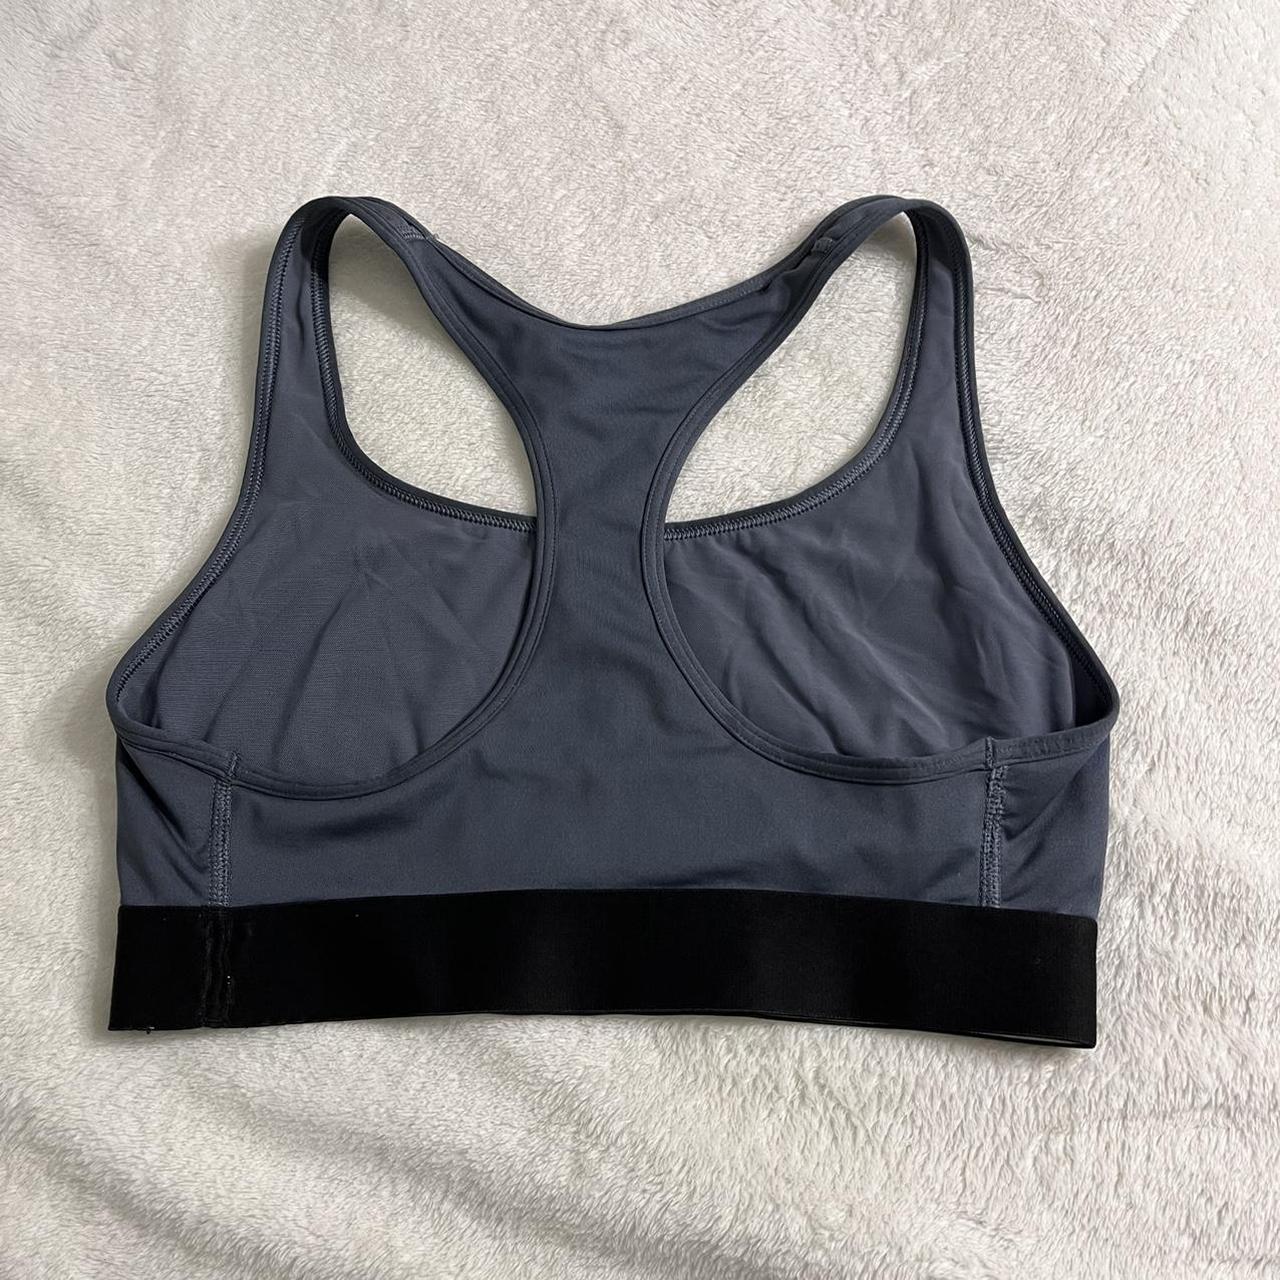 Victoria secret sports bras. Size medium Perfect - Depop